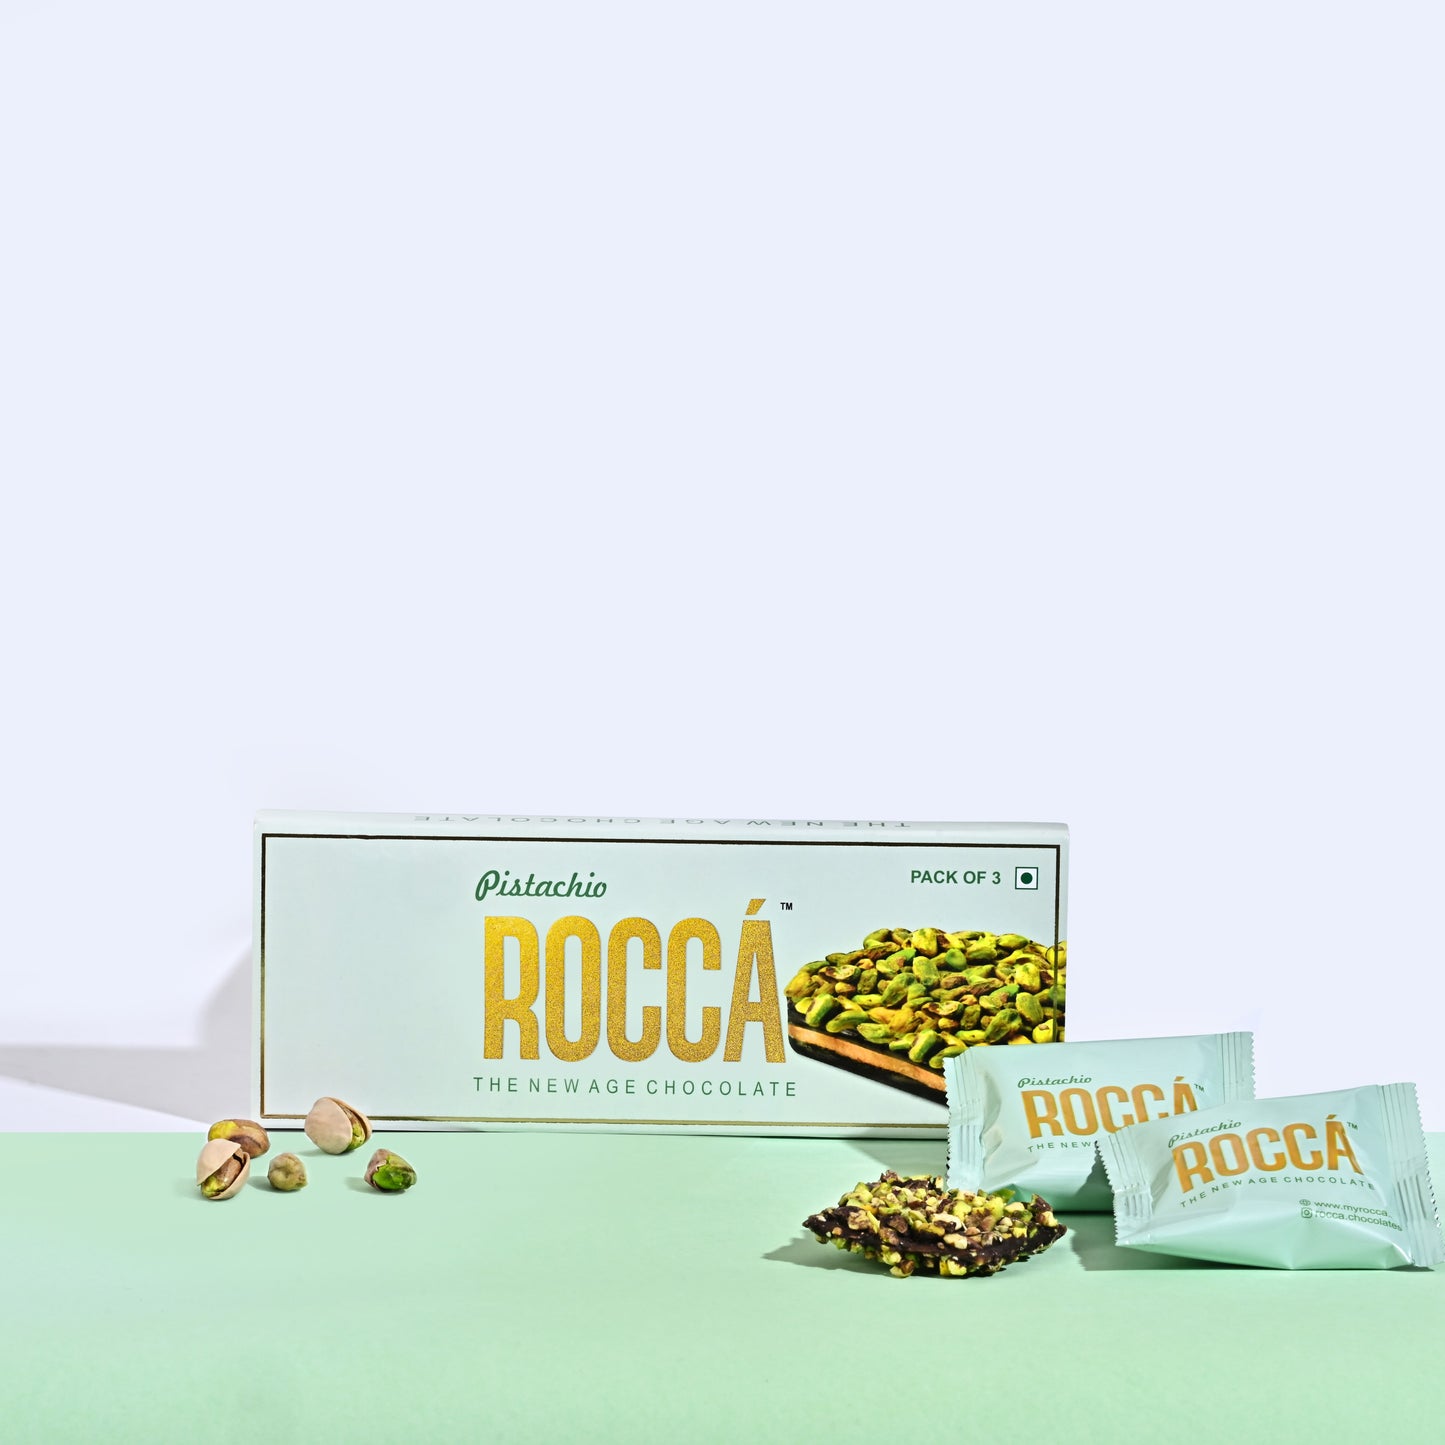 Pistachio ROCCÁ - Gourmet Pistachio Brittle Chocolate (Pack of 3)